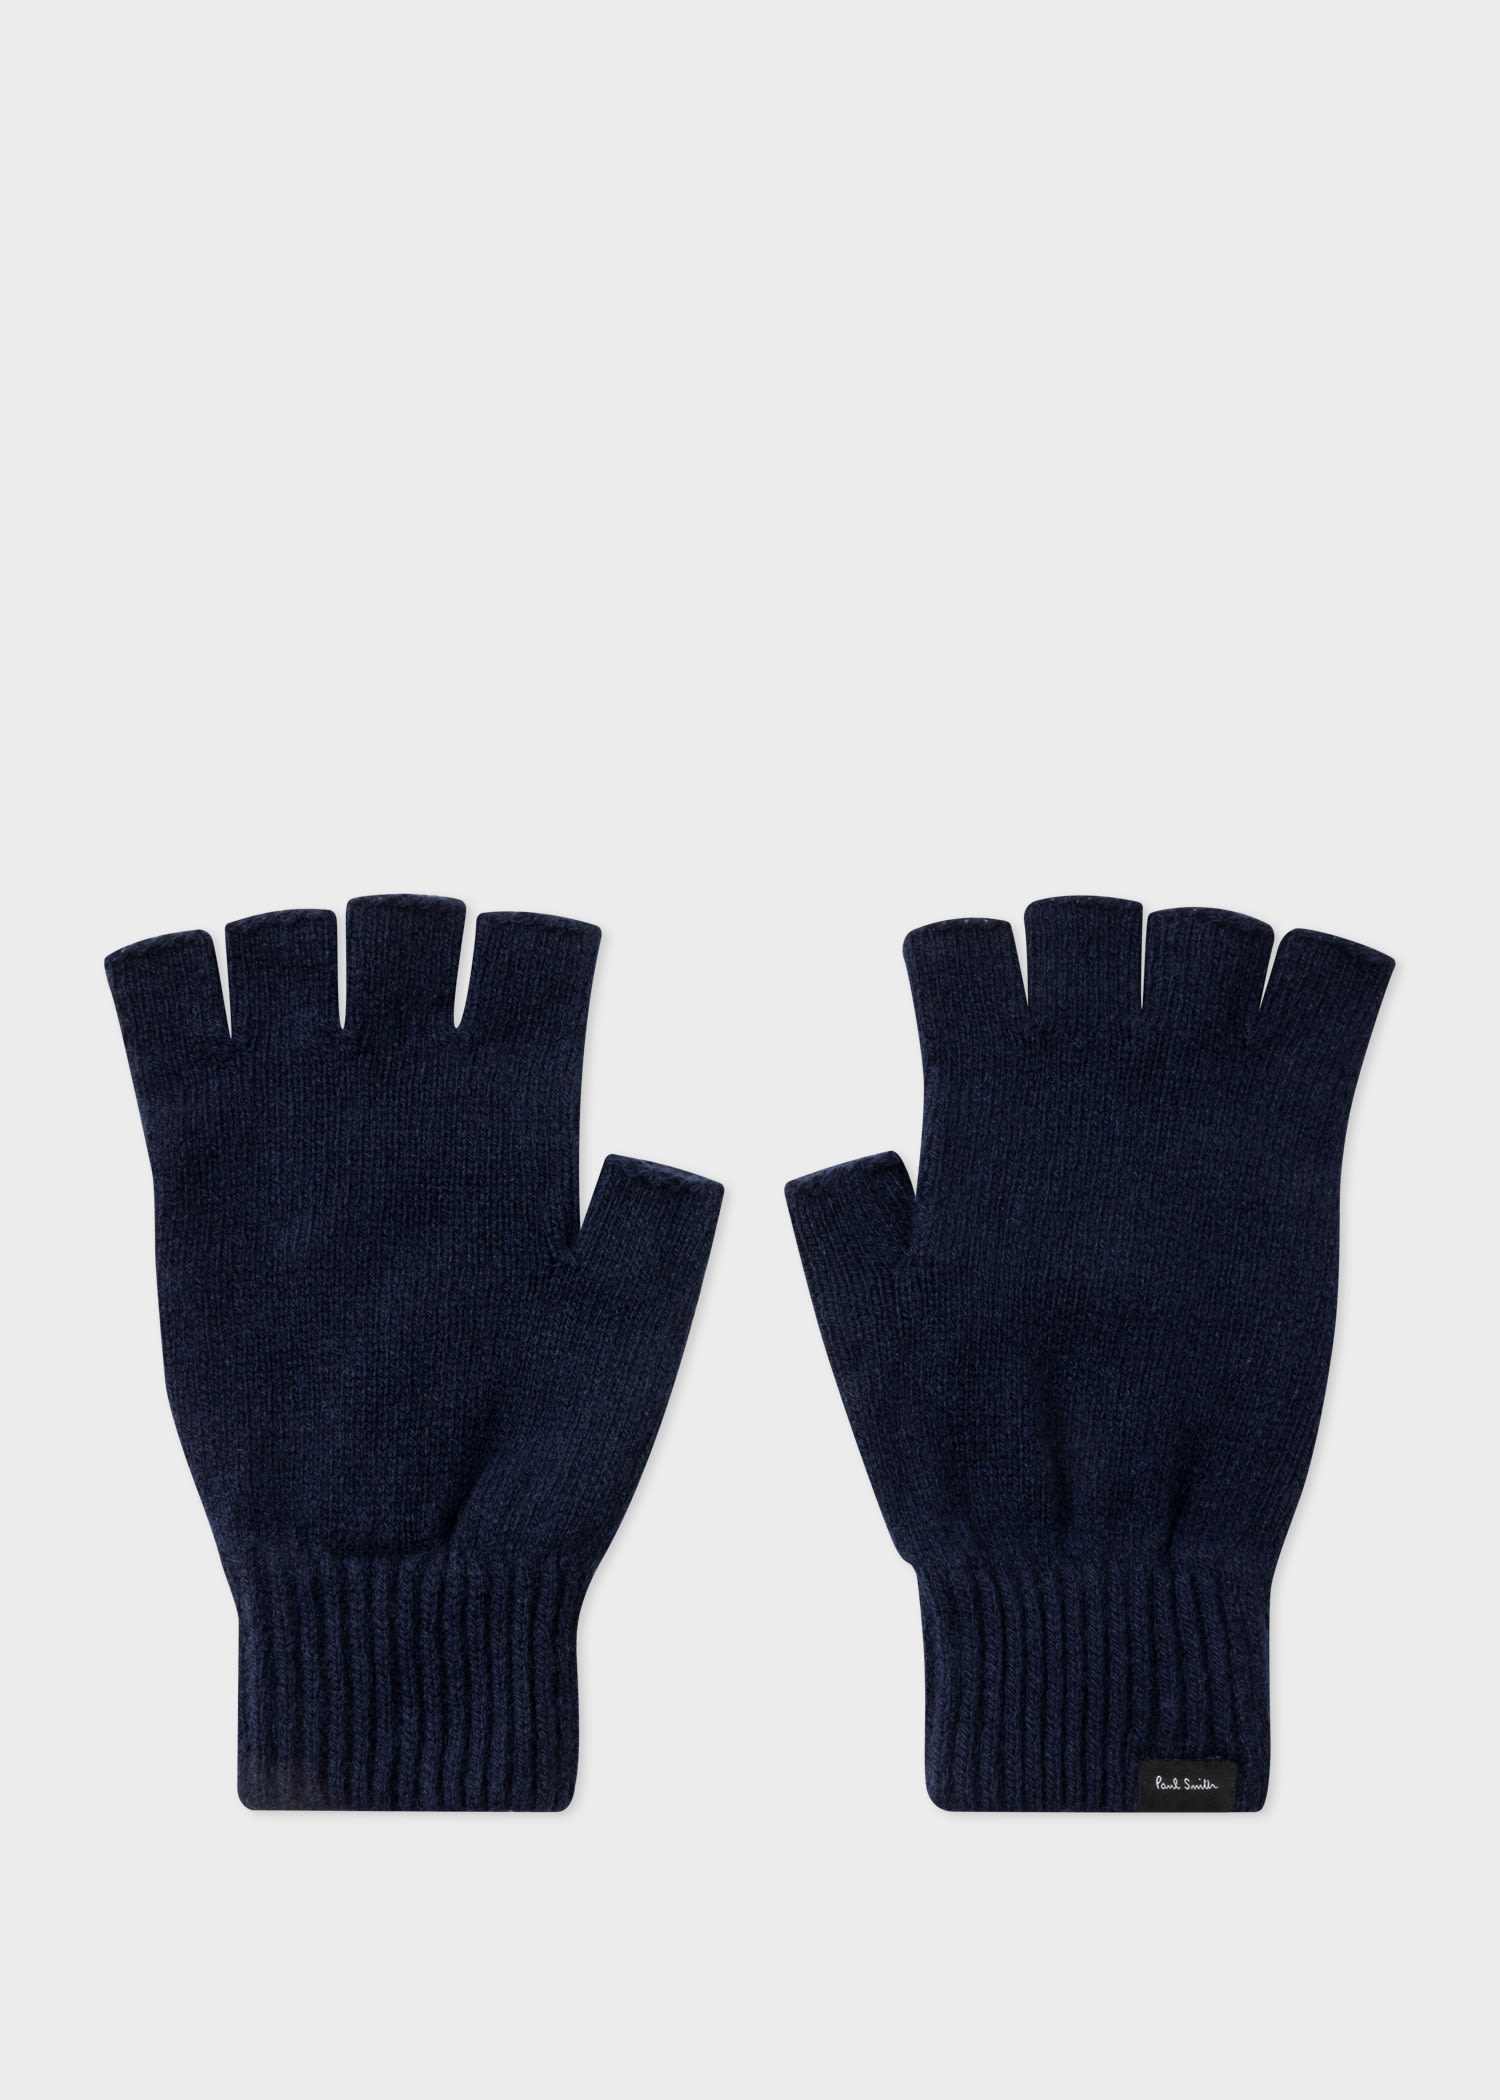 Paul Smith Dark Navy Cashmere-blend Fingerless Gloves In Blue